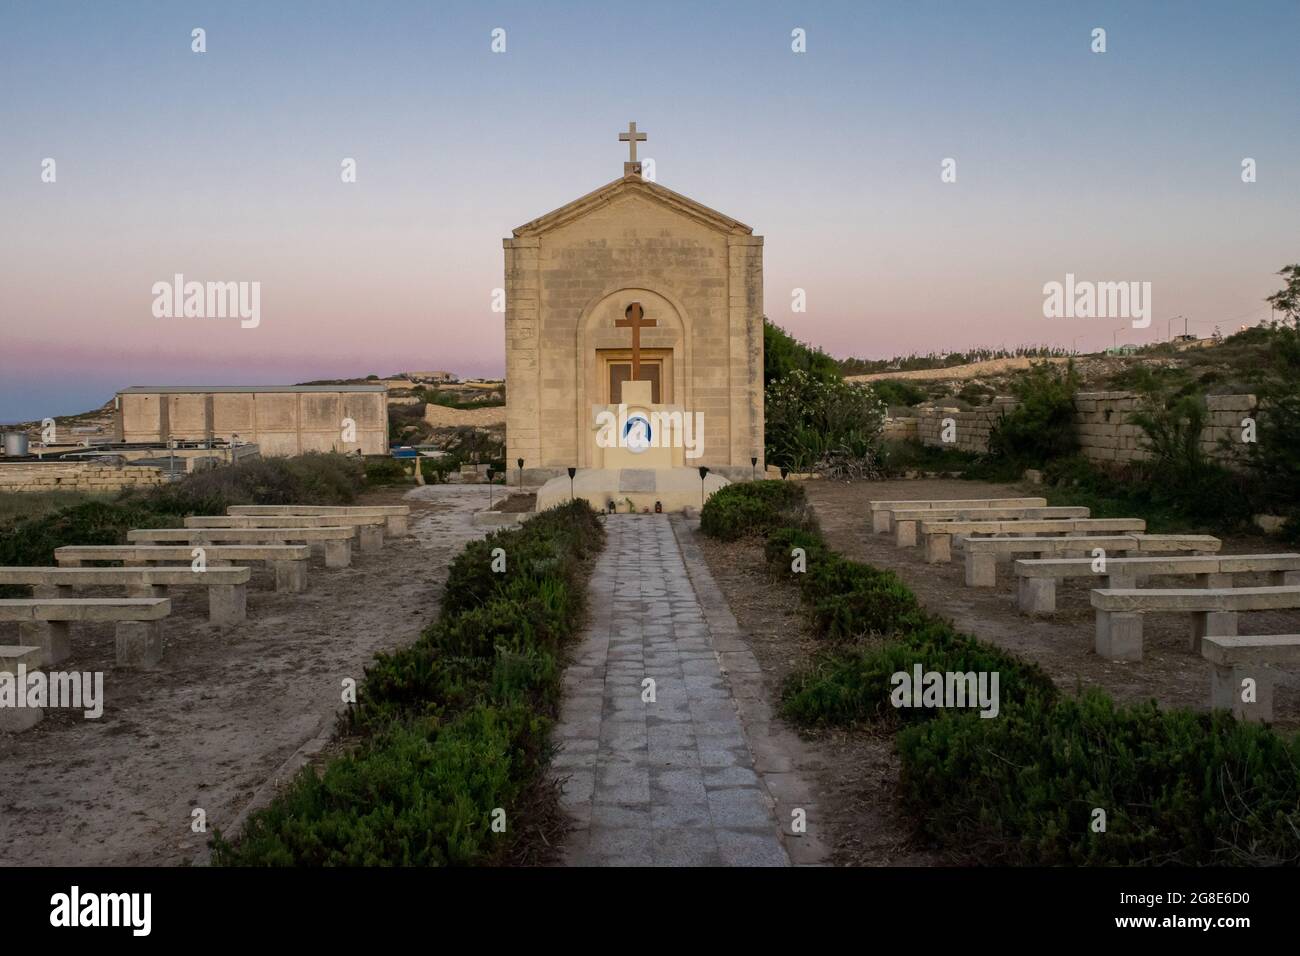 KALKARA, MALTA - May 22, 2020: a Christian chapel and cemetery of cholera disease victims in the area known as Wied Ghammieq, Kalkara, Malta Stock Photo